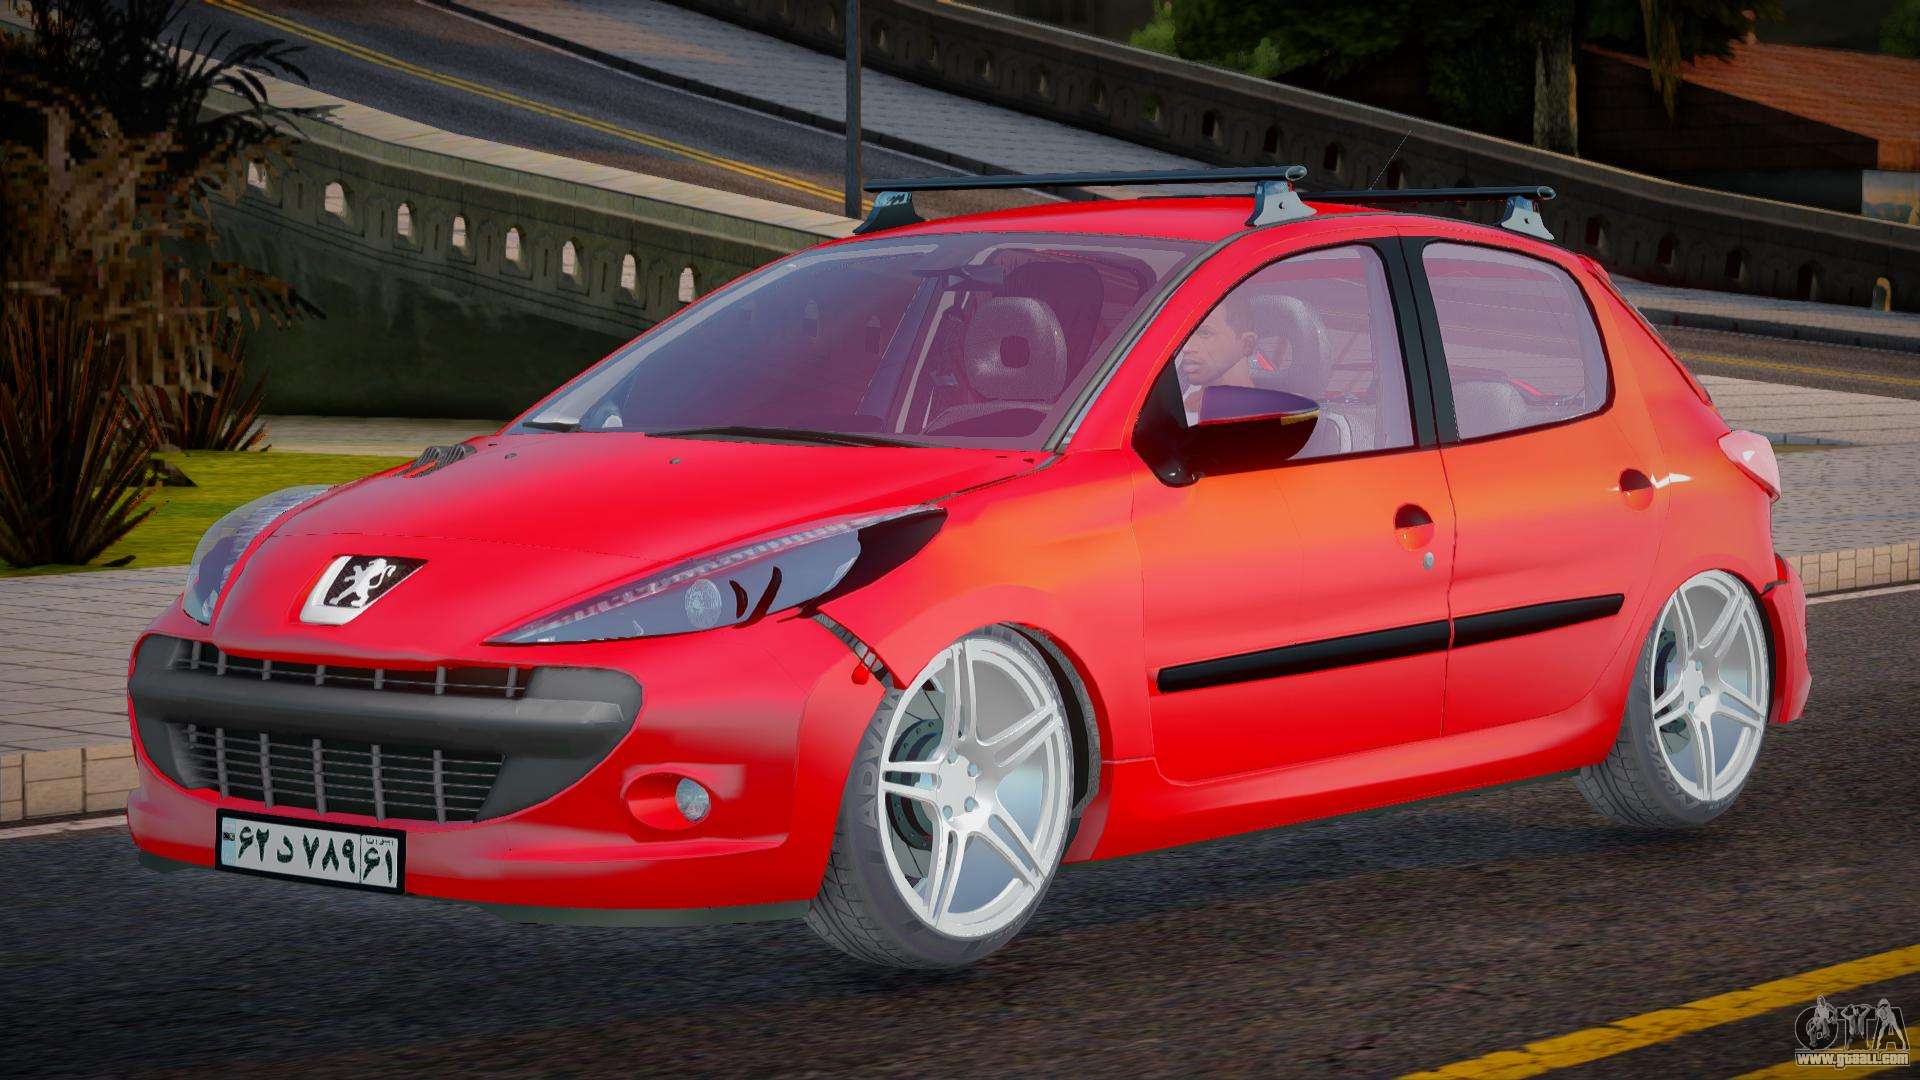 GTA San Andreas Peugeot 207 Tuning v2 Mod 